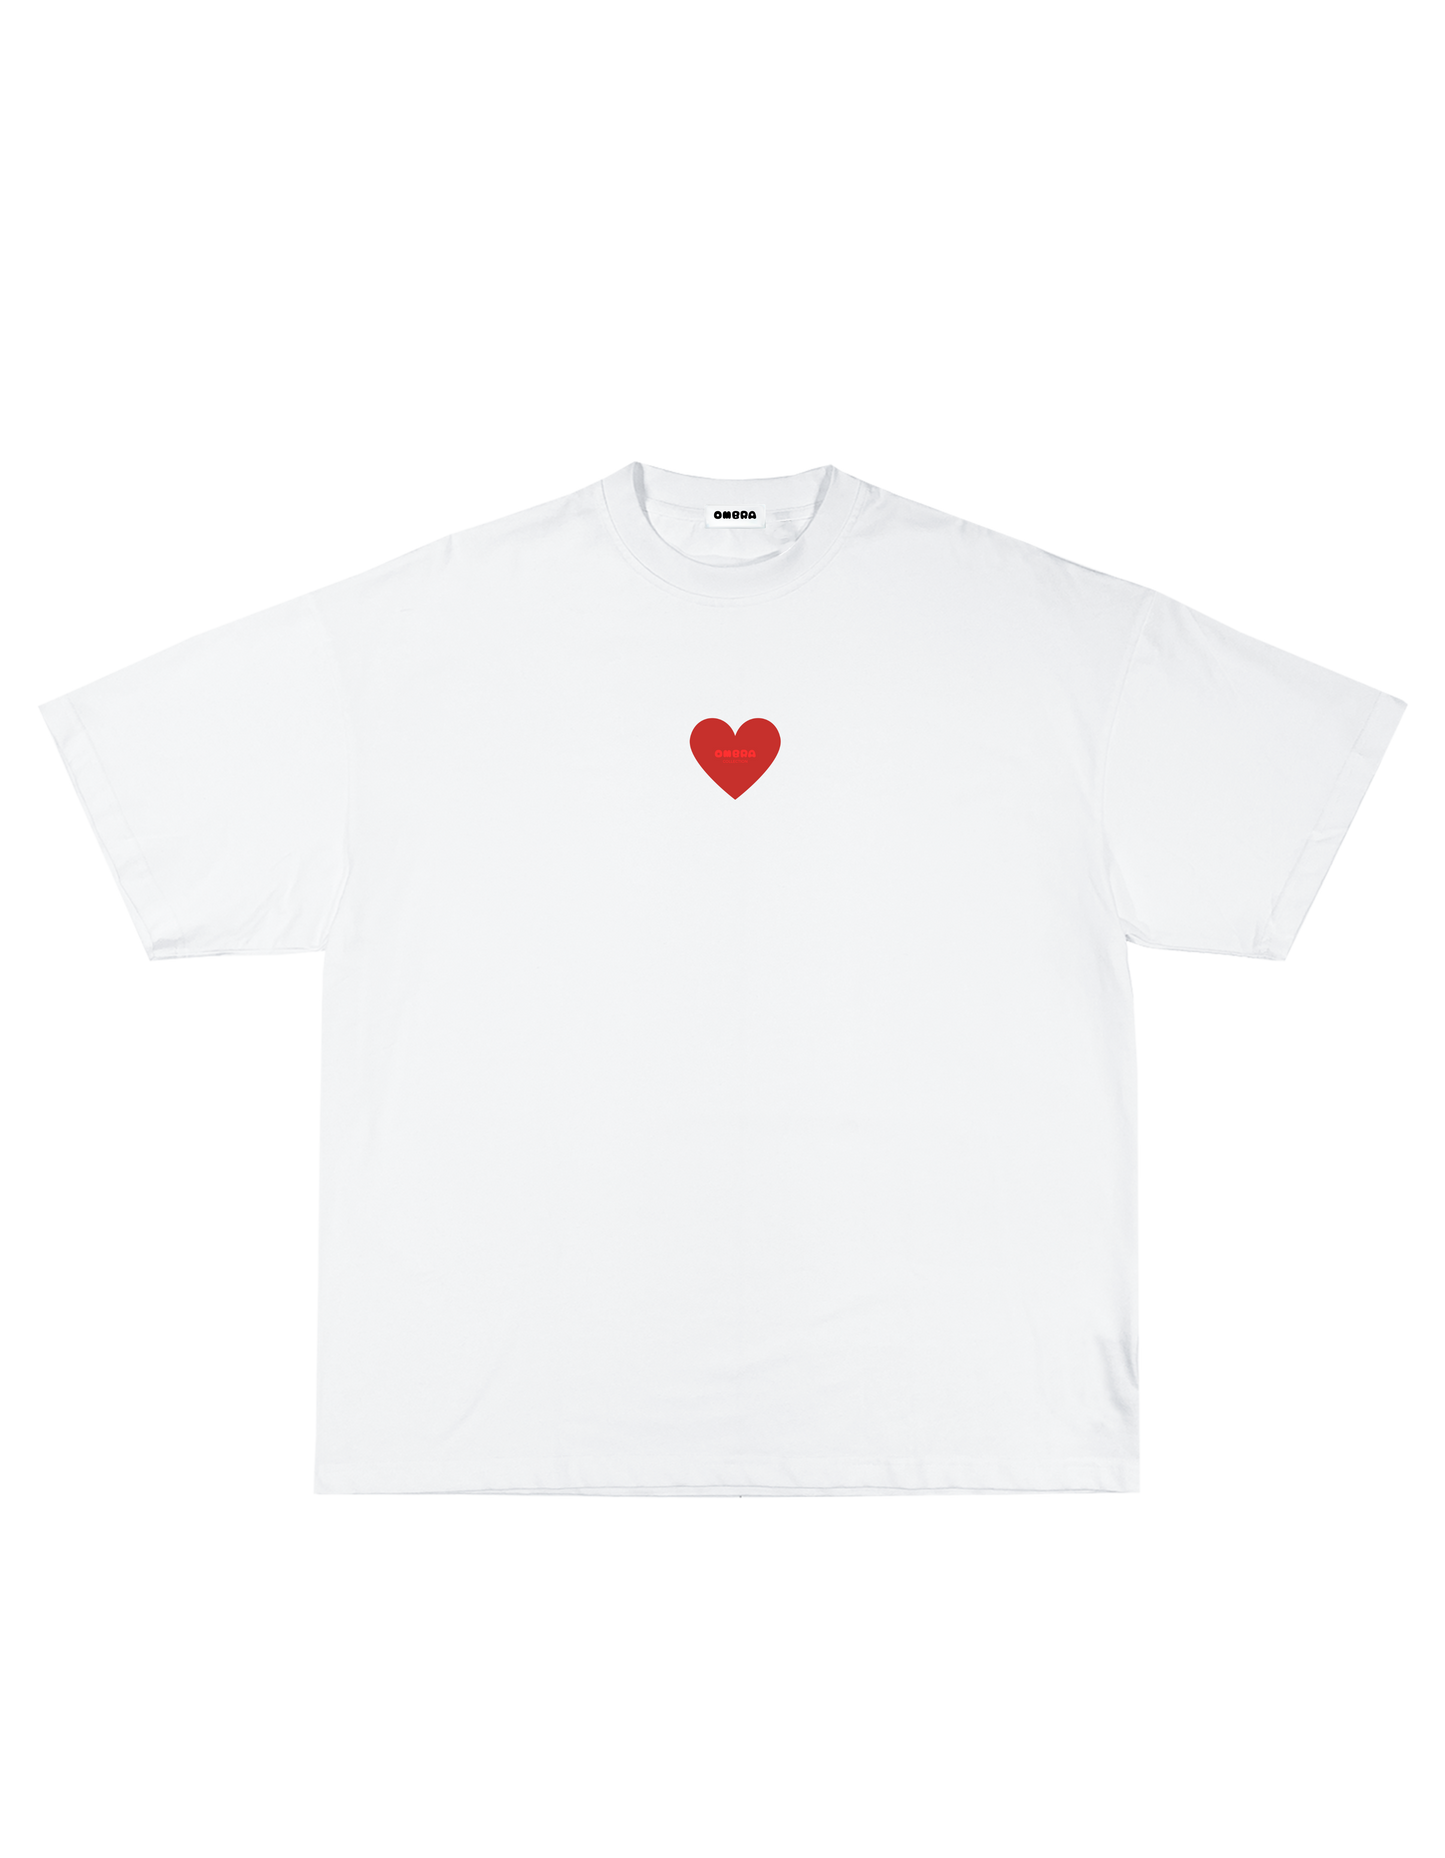 T-shirt White Red heart